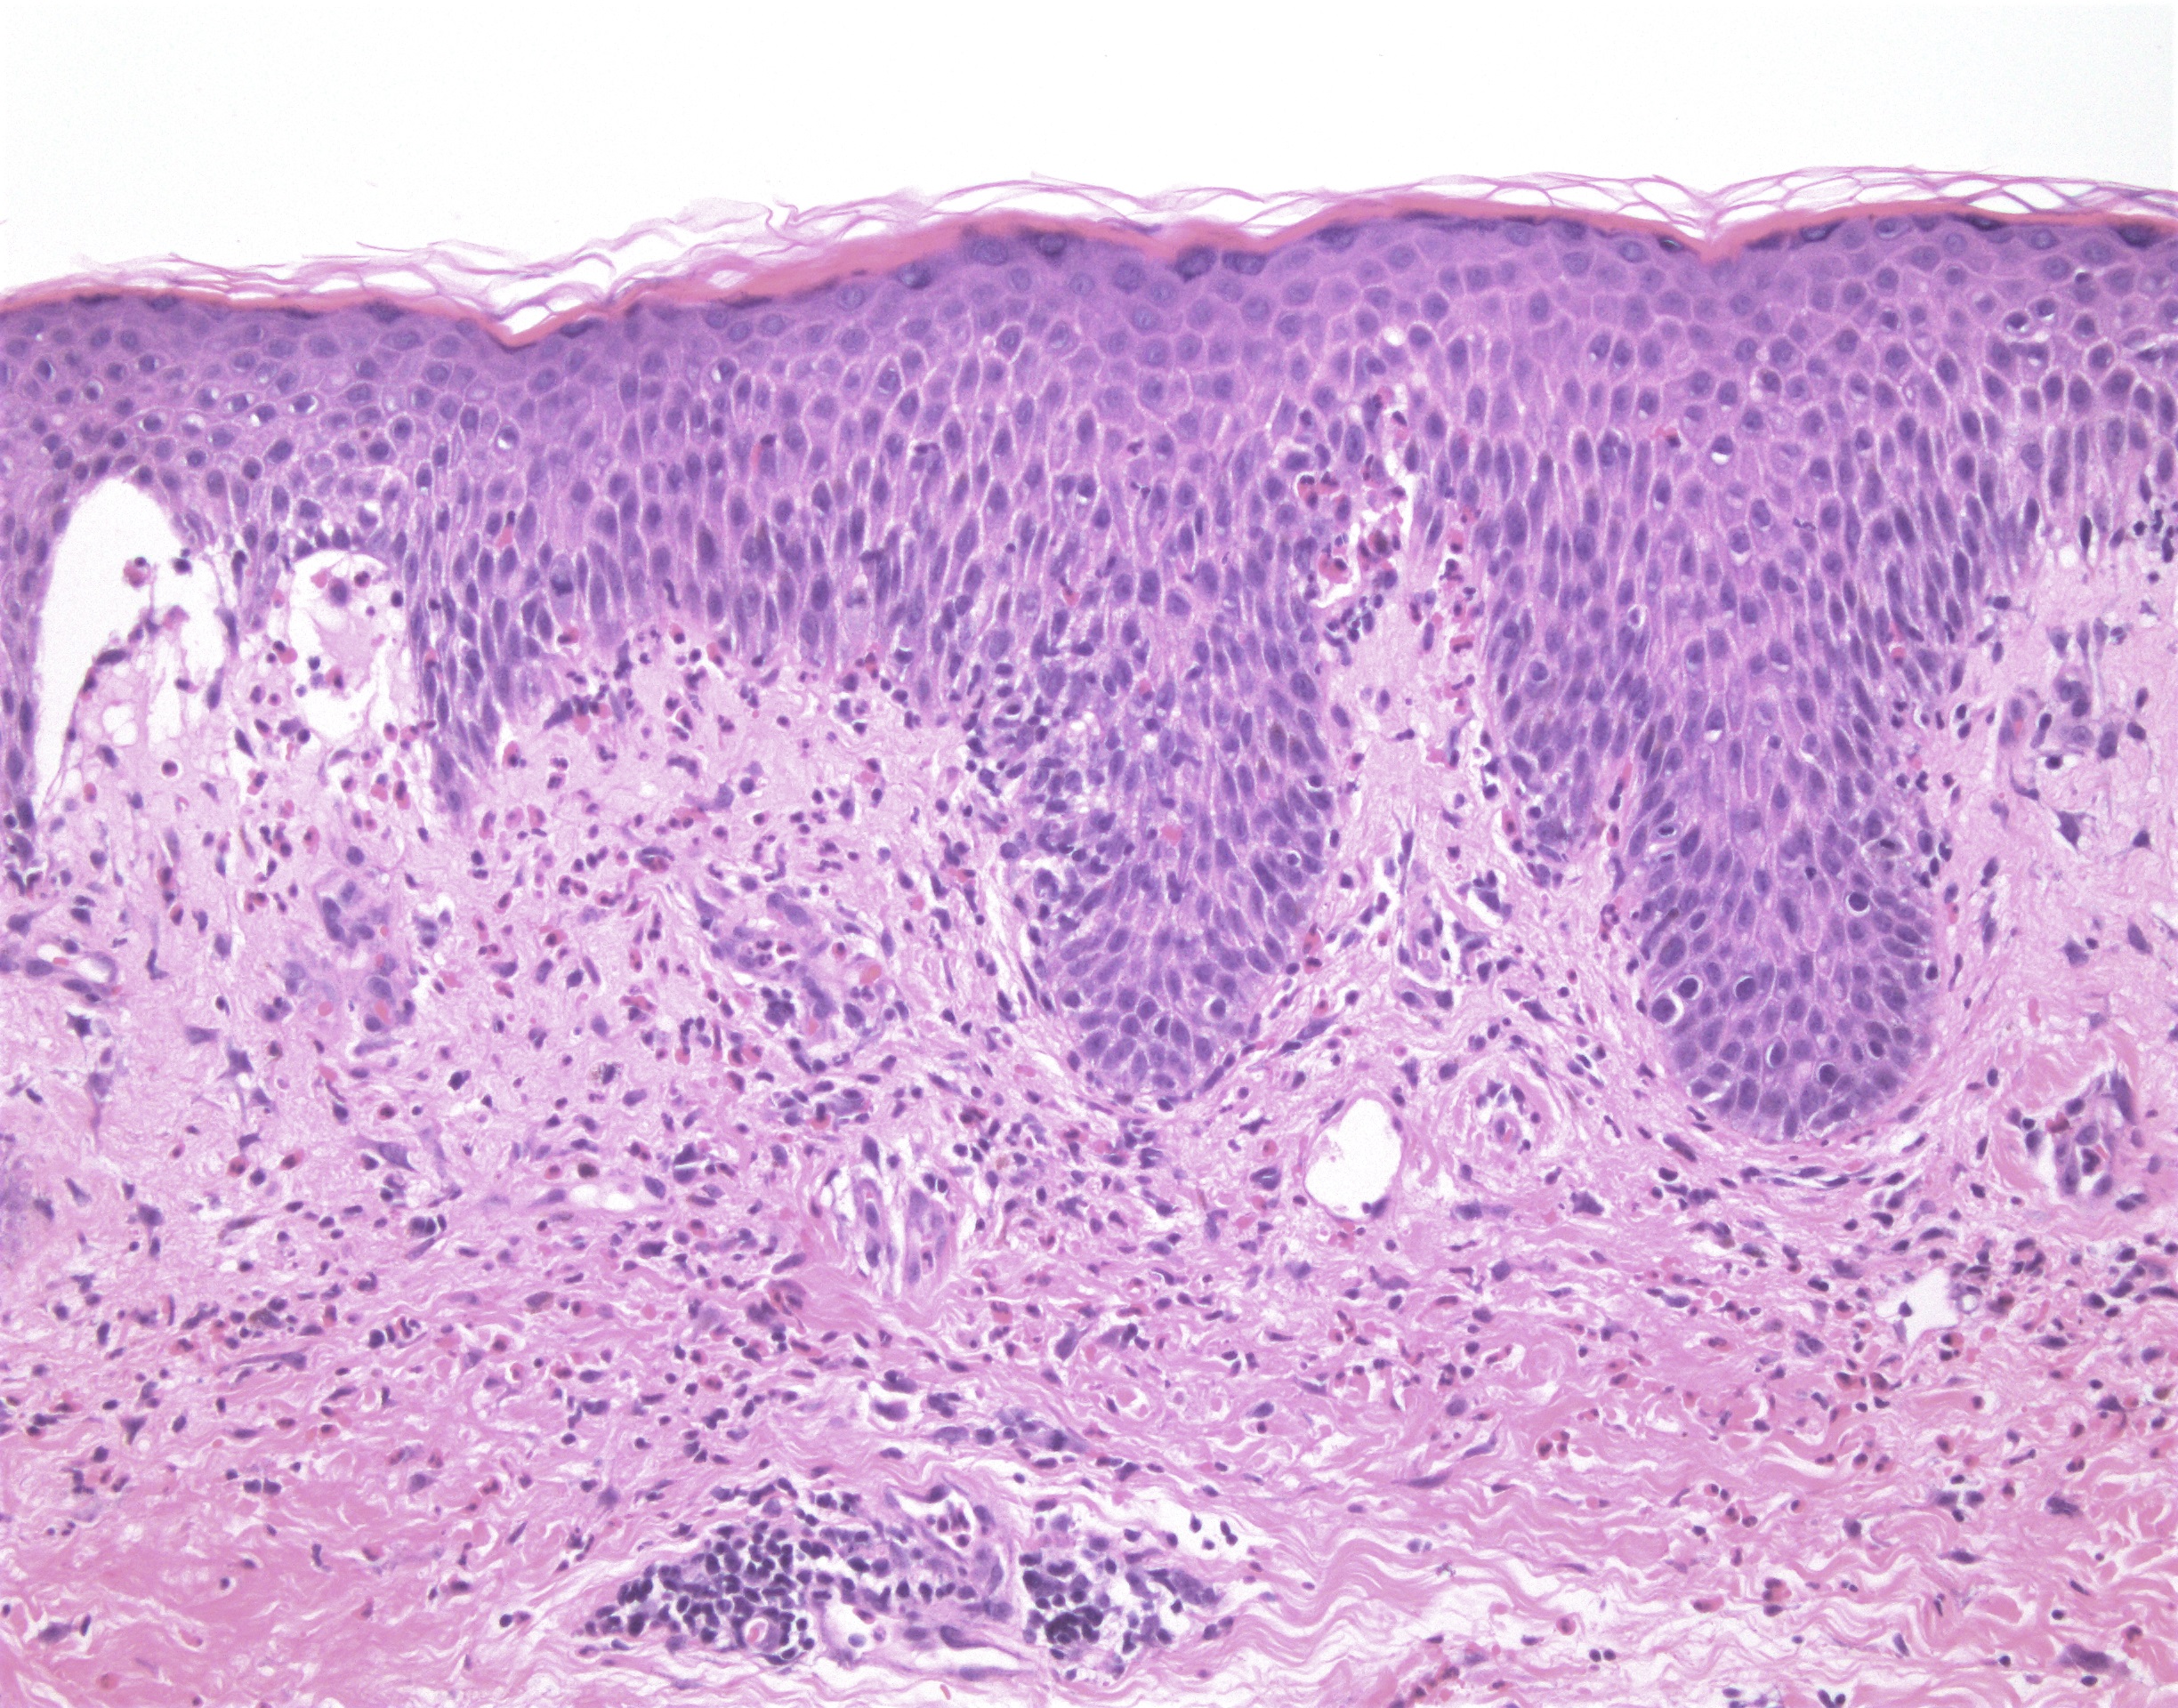 Eosinophilic spongiosis with adjacent subepidermal blister